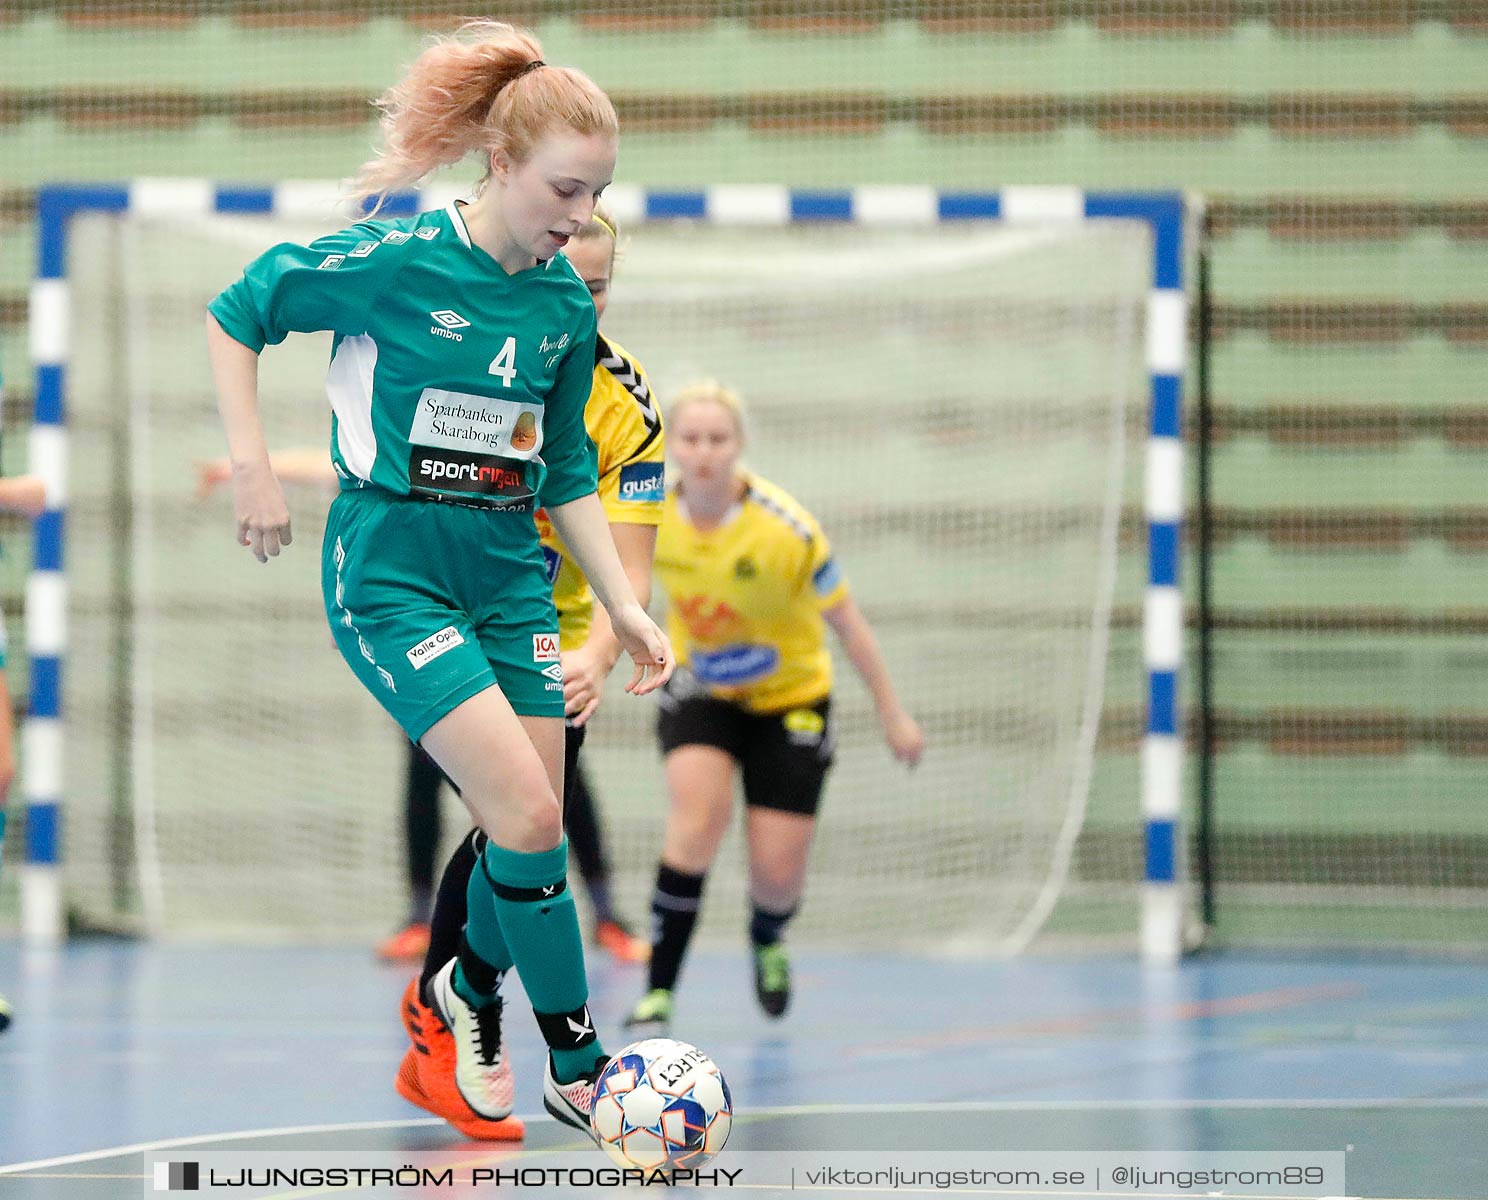 Skövde Futsalcup 2019 Damer Skultorps IF-Axvalls IF,dam,Arena Skövde,Skövde,Sverige,Futsal,,2019,227042